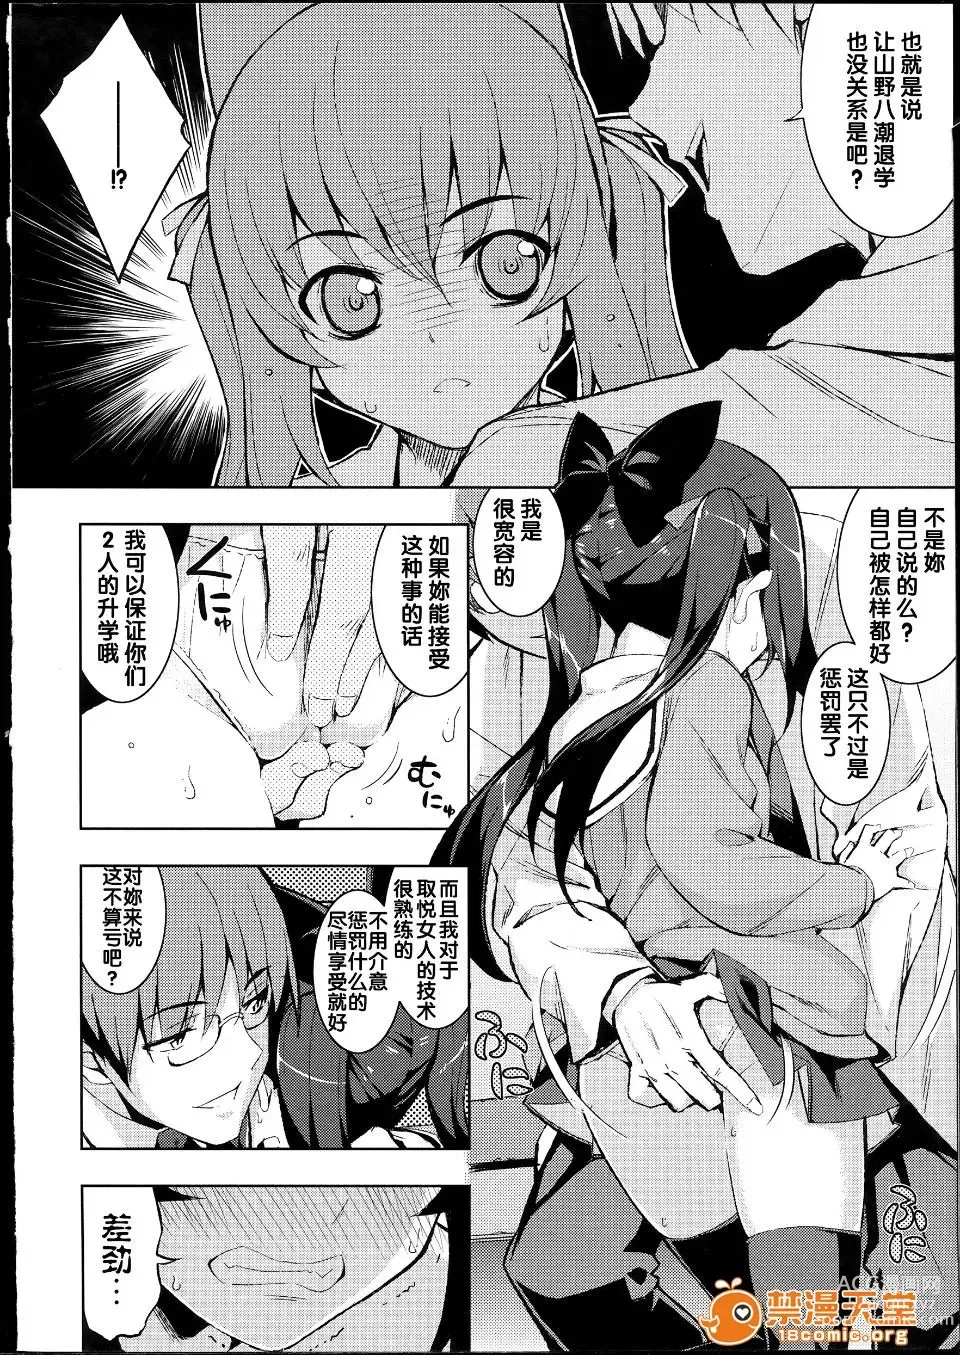 Page 18 of manga NTR²